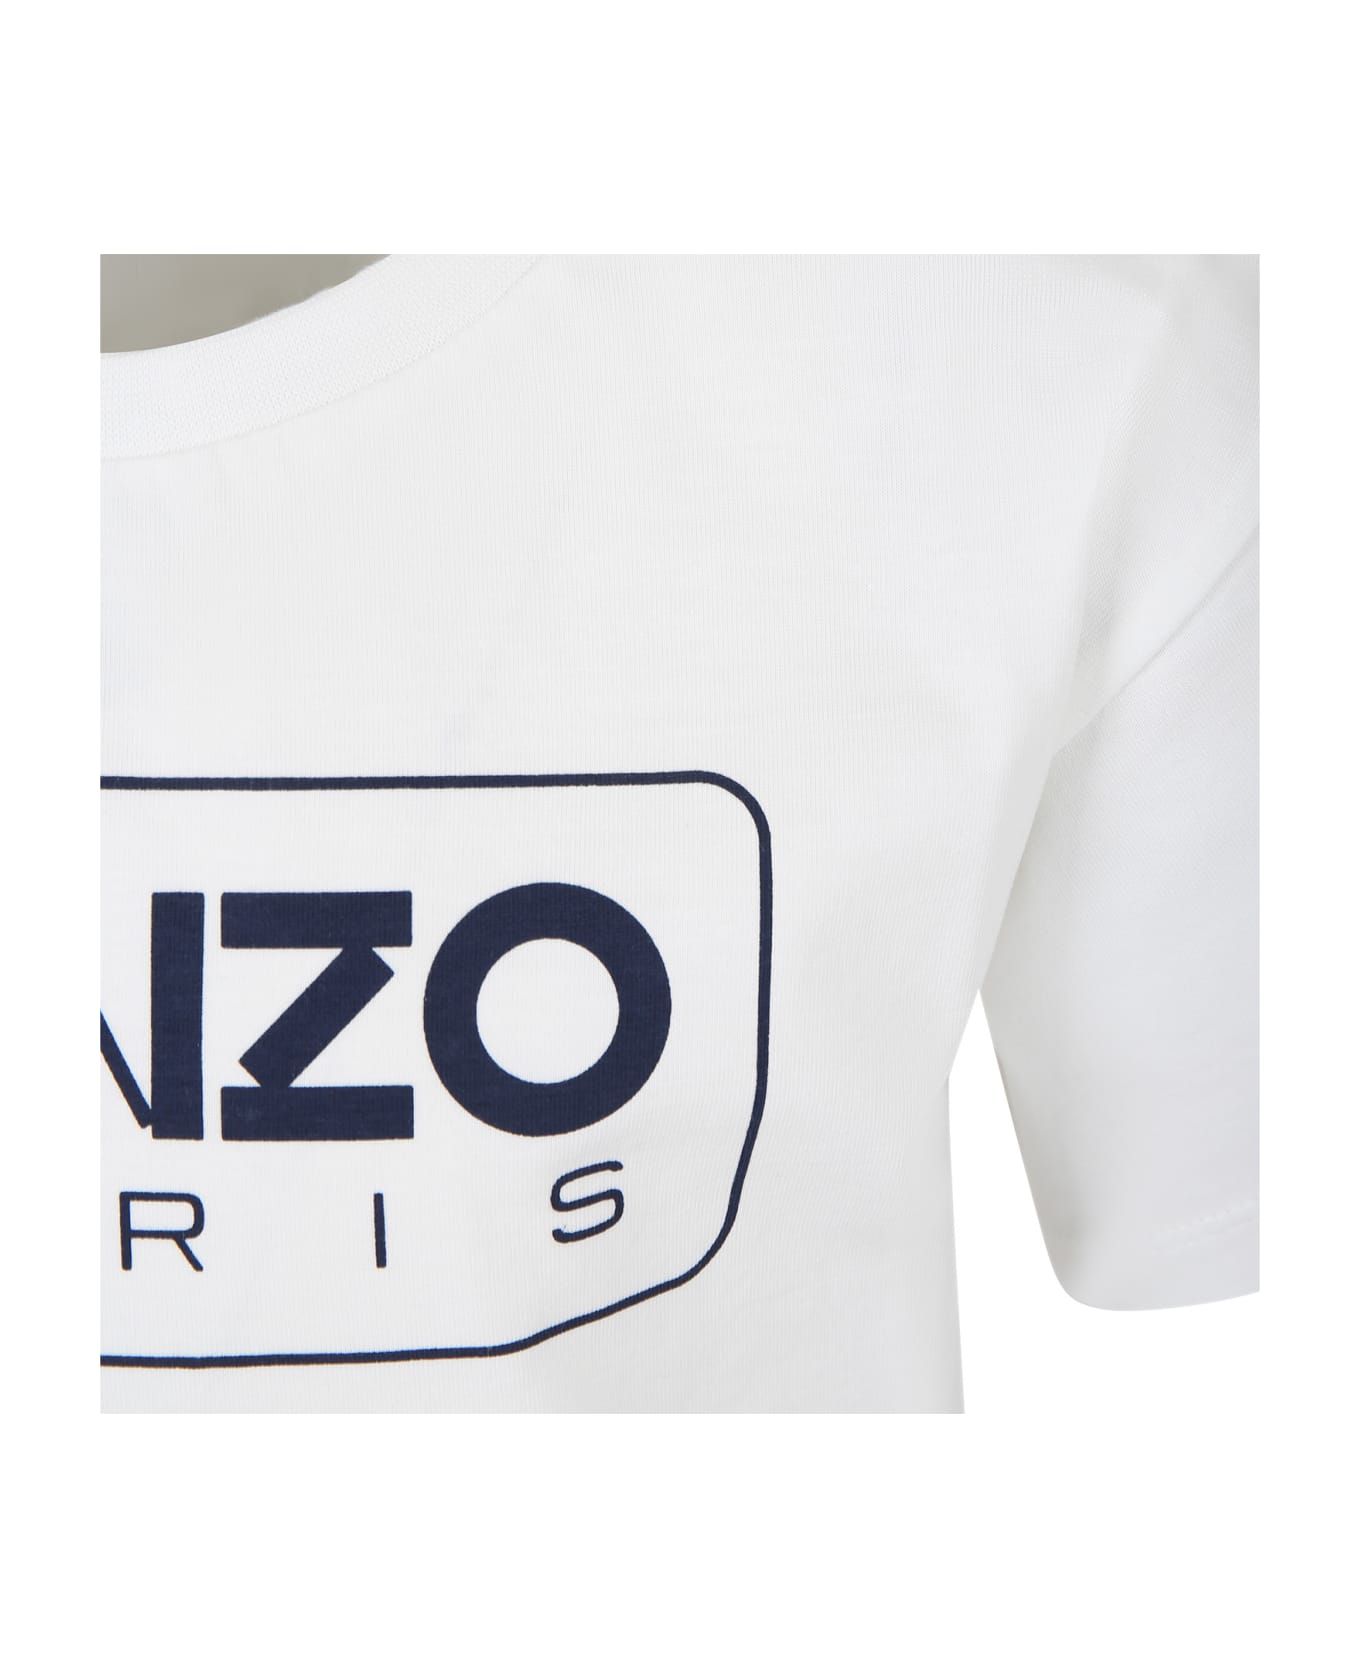 Kenzo Kids Ivory T-shirt For Kids With Logo - Avorio